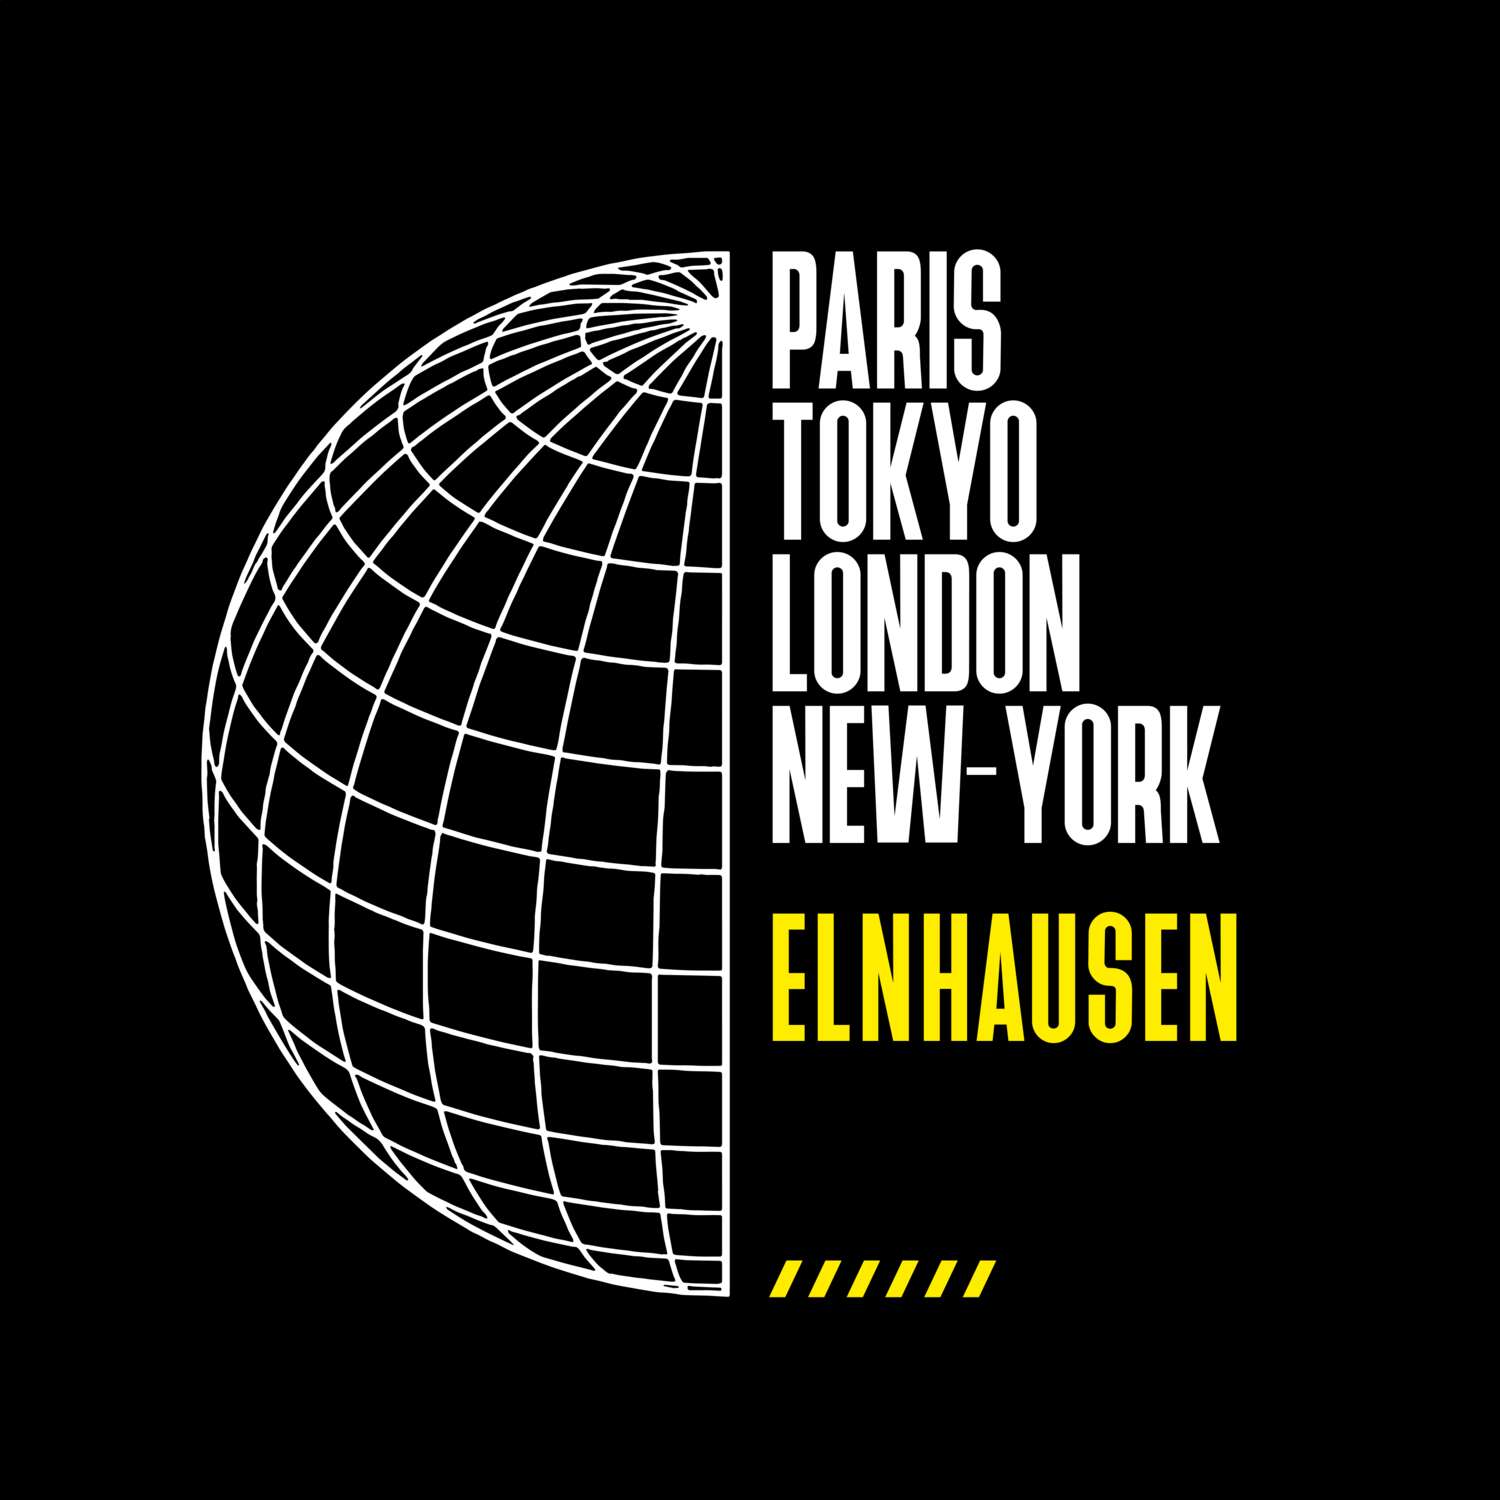 Elnhausen T-Shirt »Paris Tokyo London«